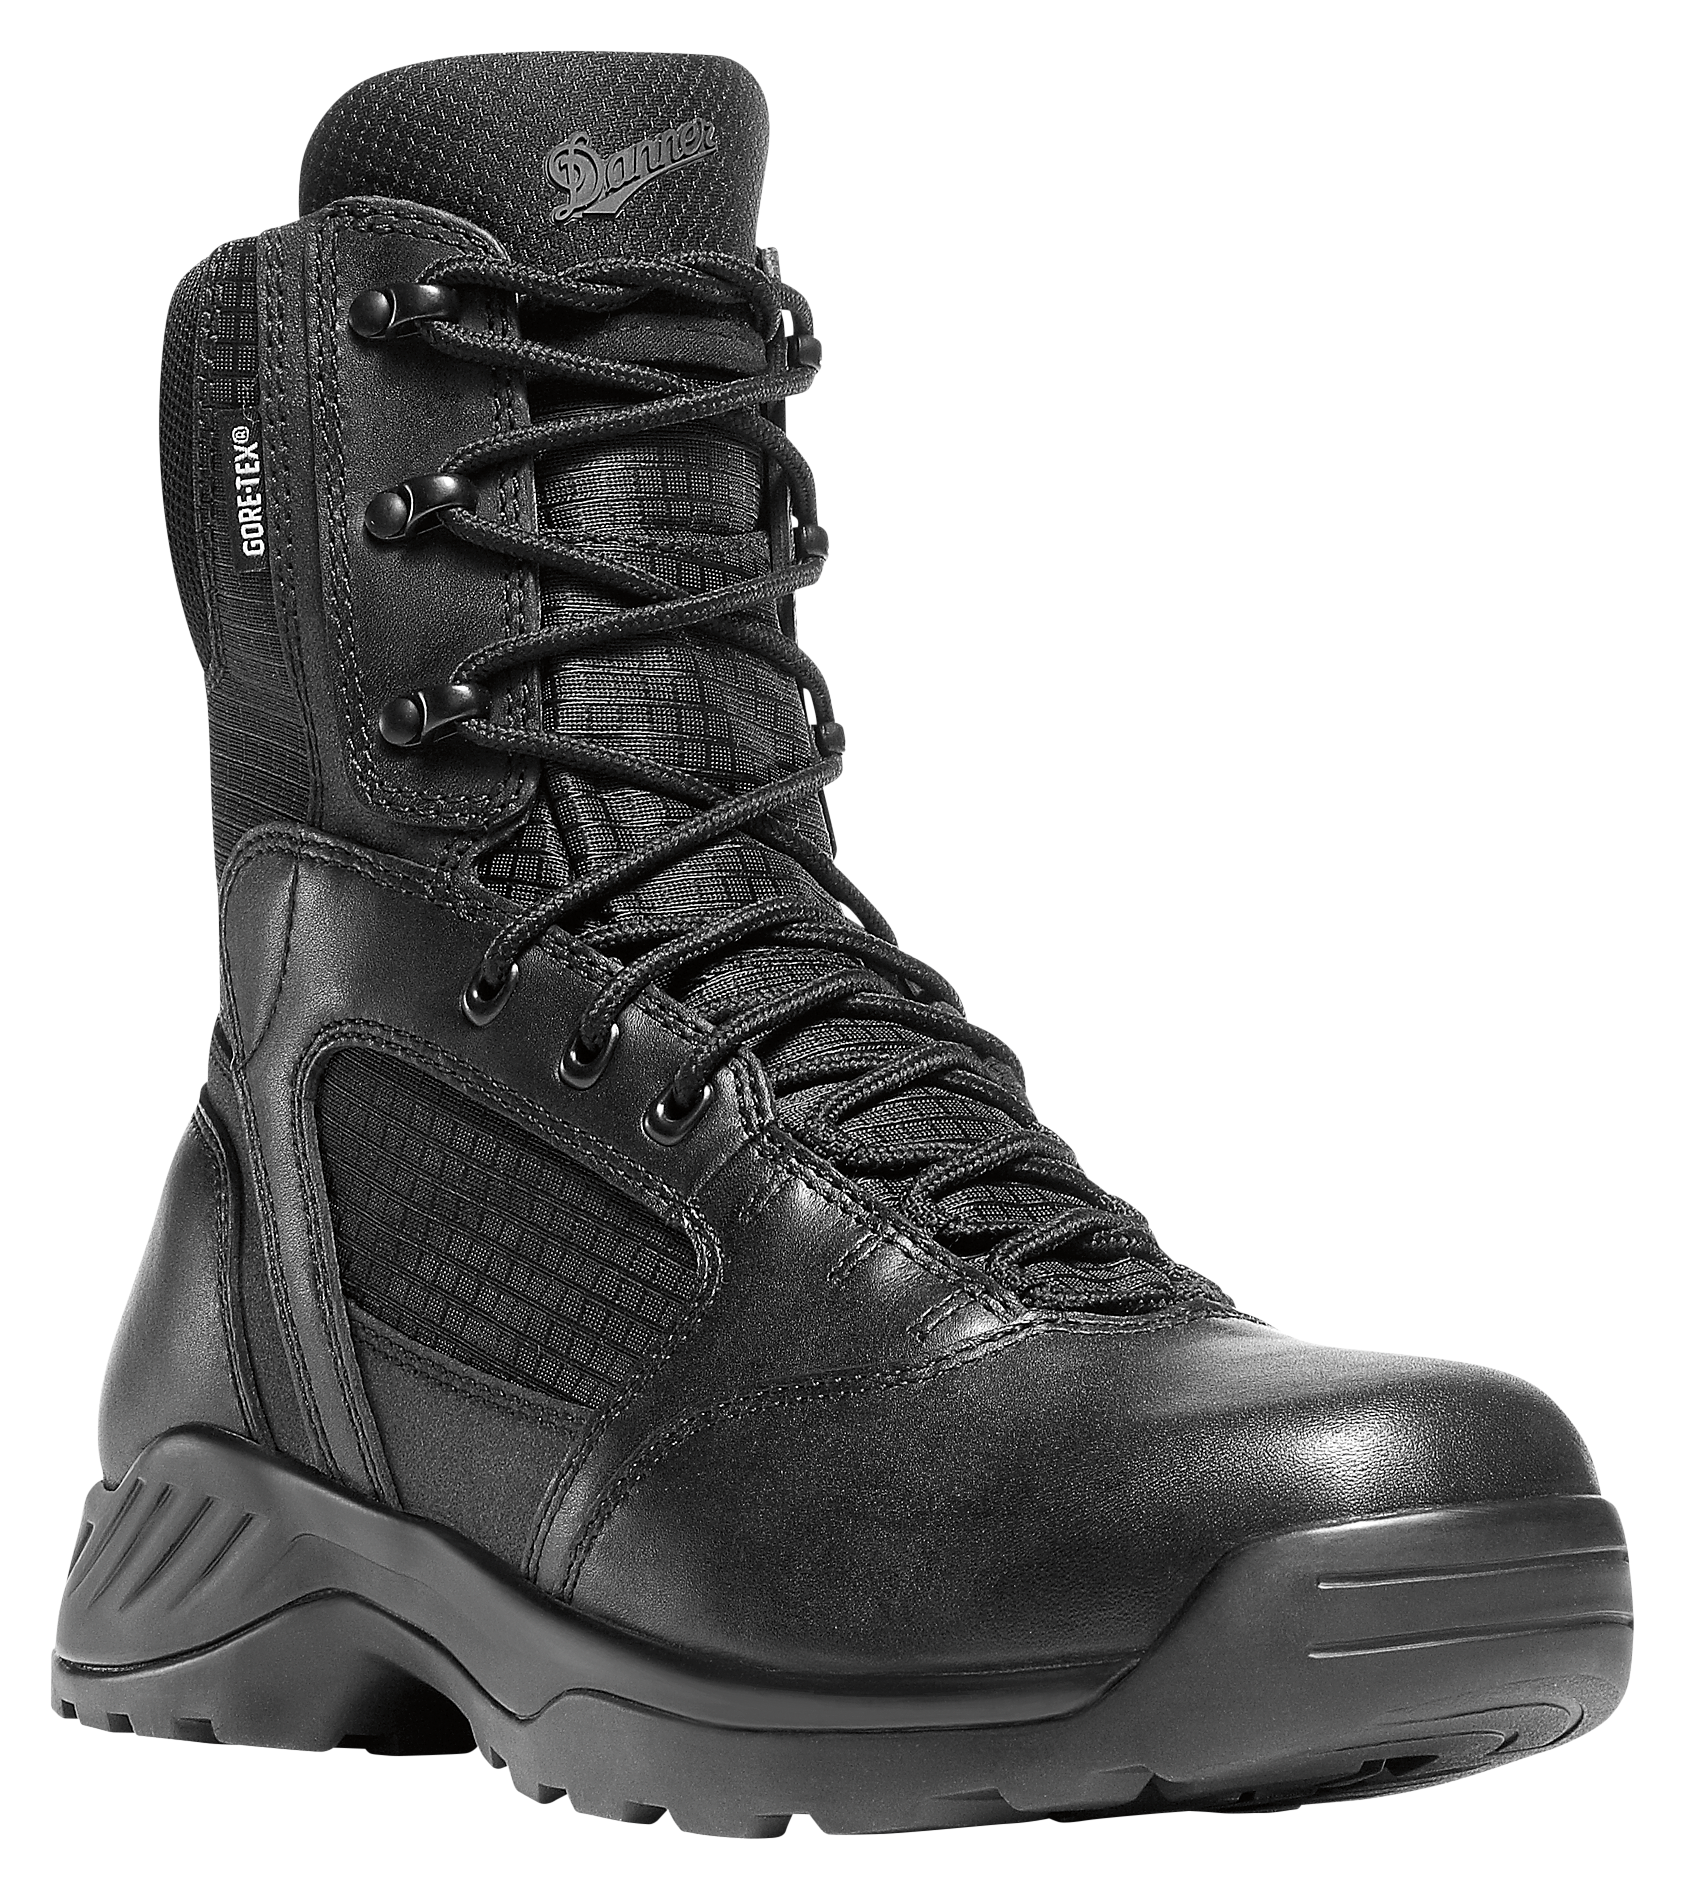 Danner Kinetic GTX Side-Zip Waterproof Tactical Duty Boots for Men - Black - 13W